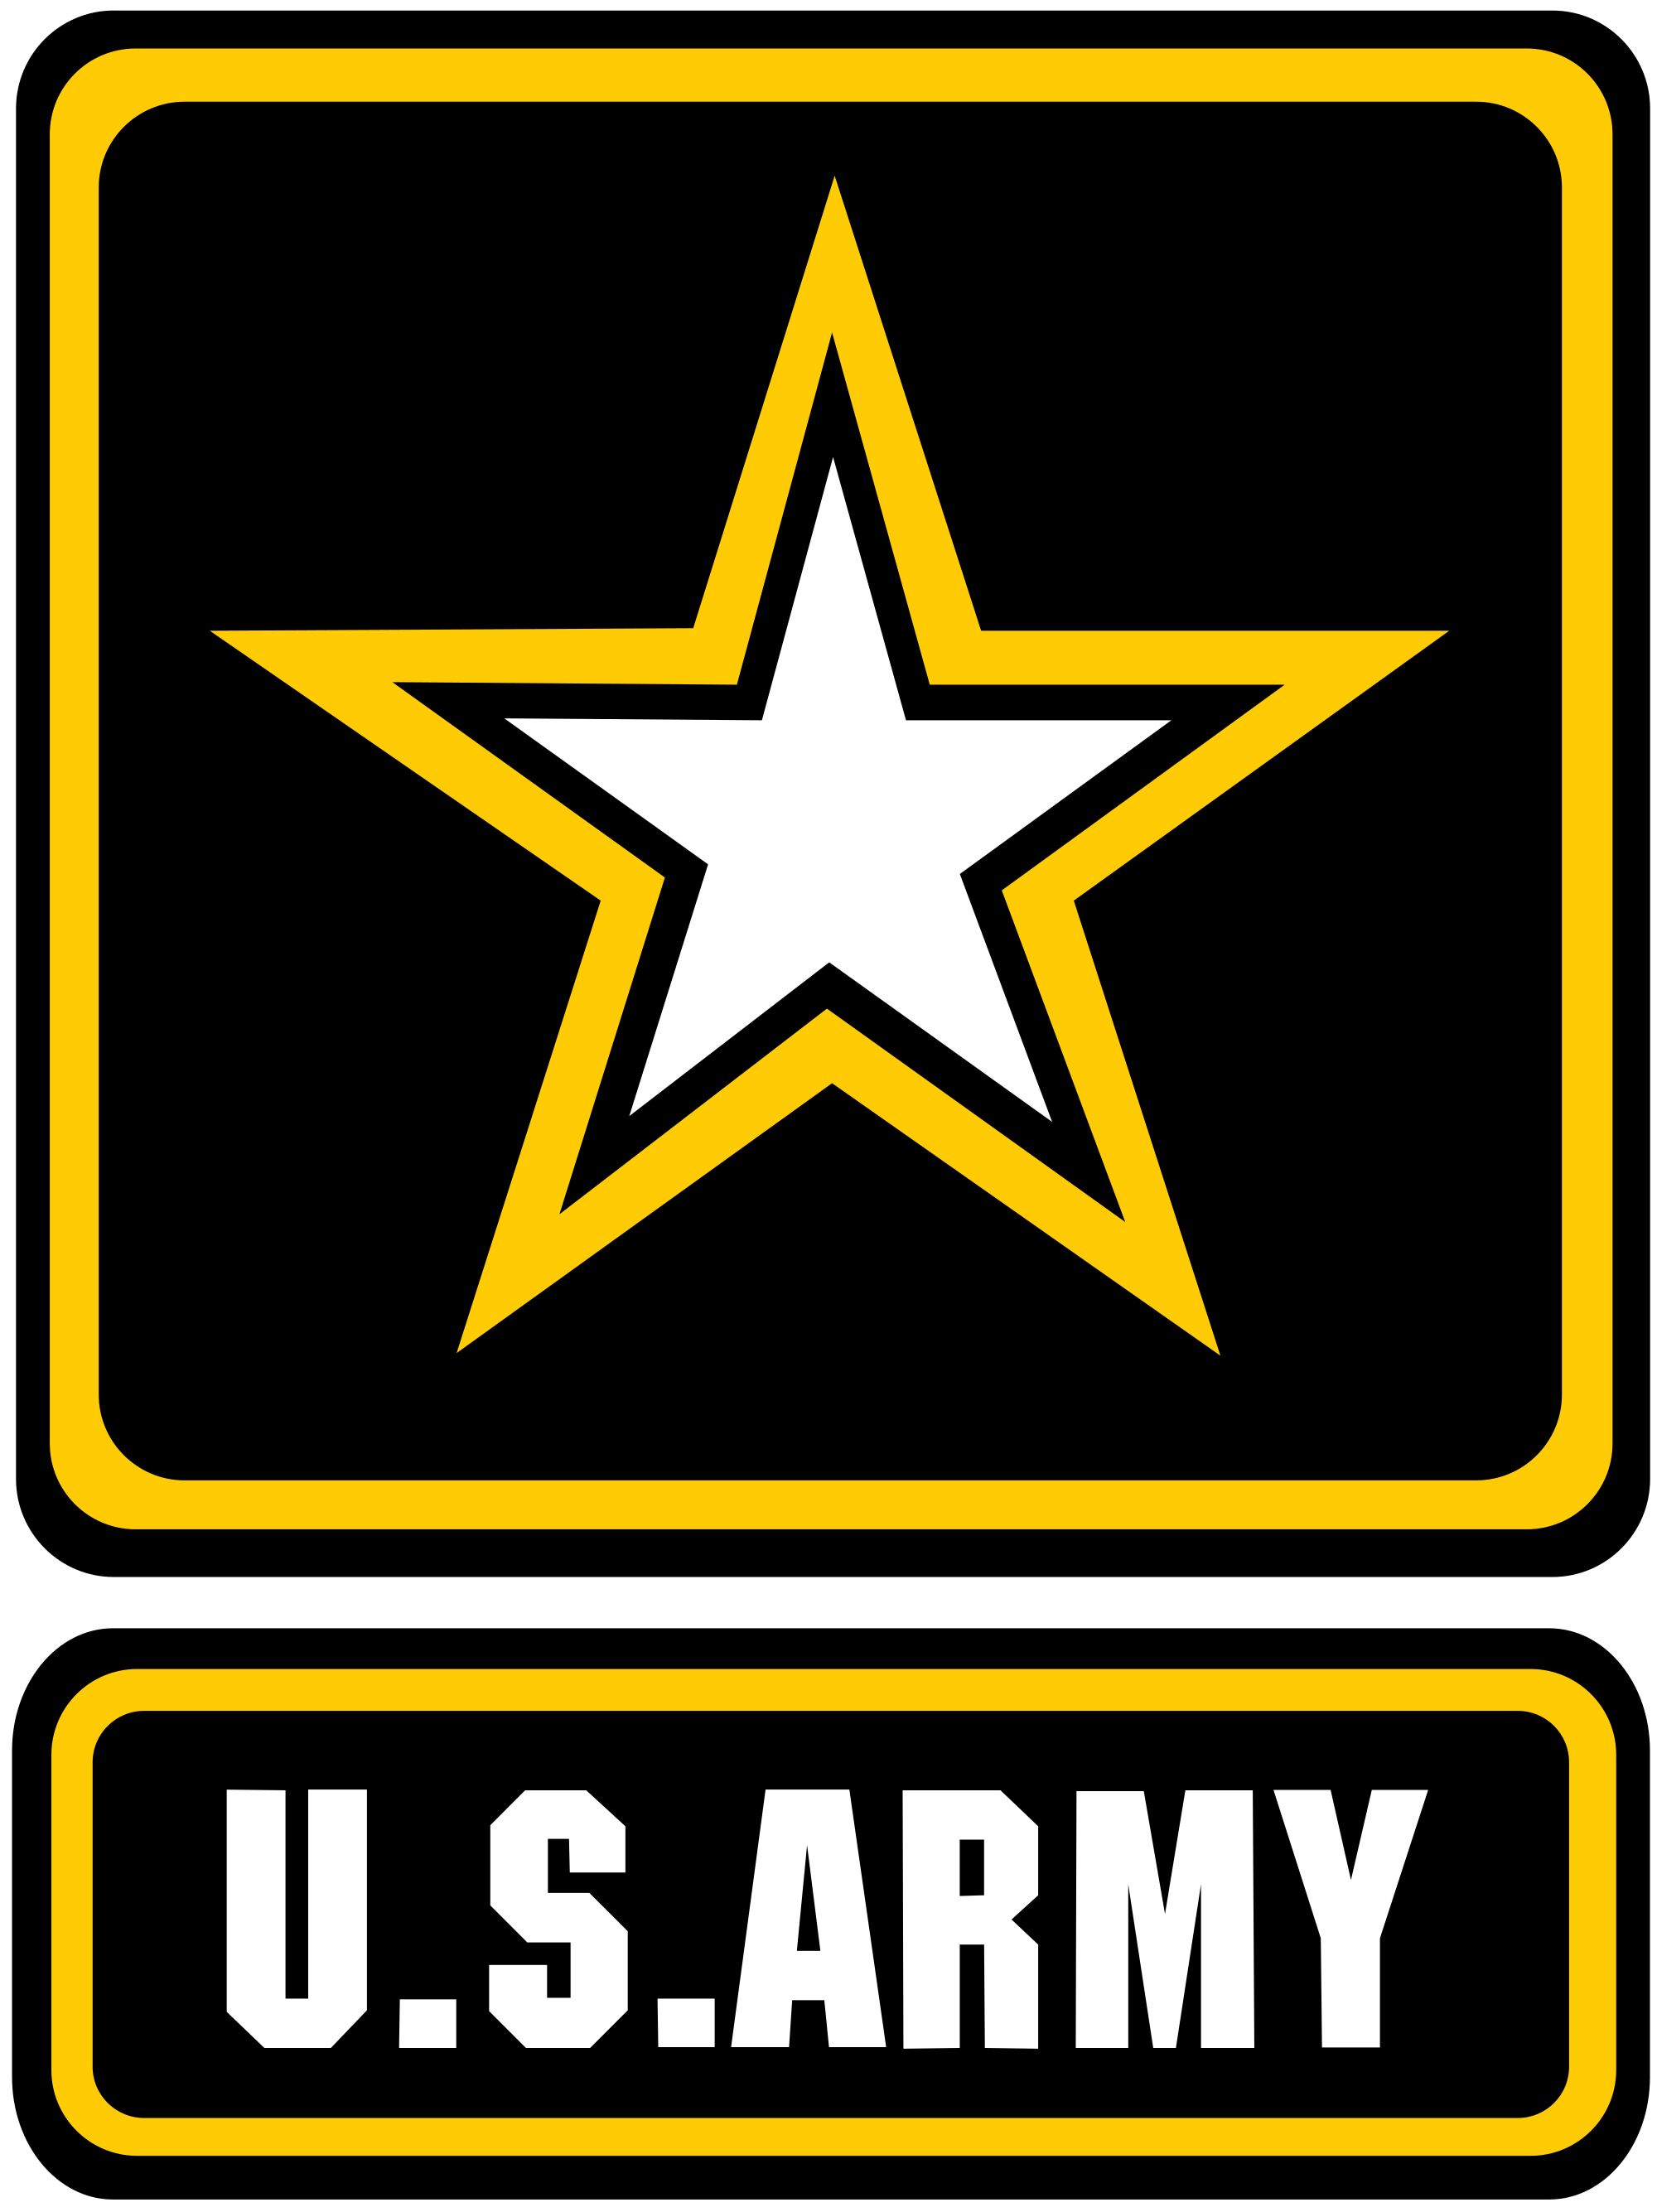 Army Logo - File:US Army logo.svg - Wikimedia Commons